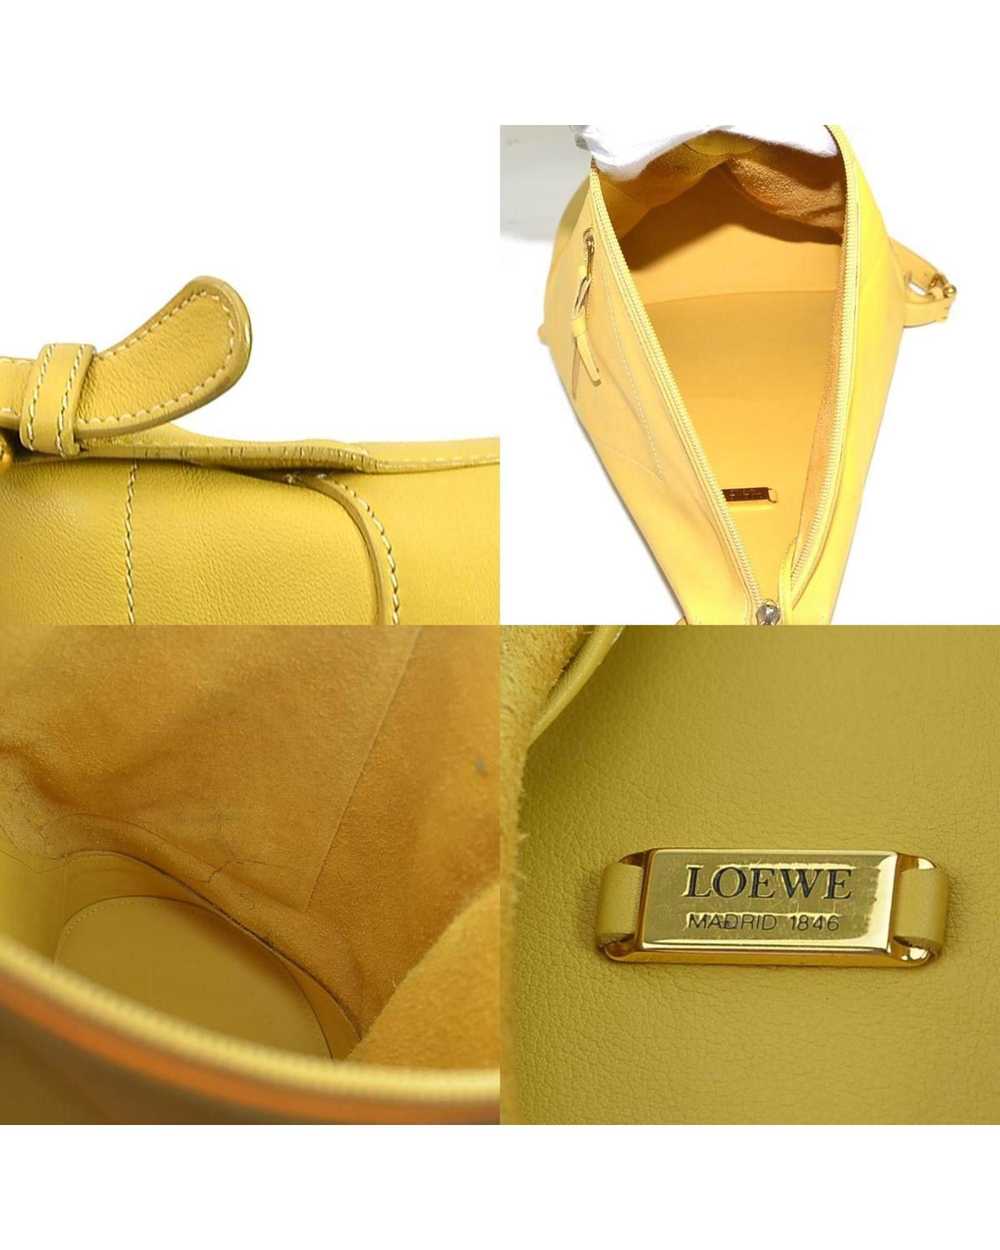 Loewe Loewe Anton Leather Crossbody Bag - image 5